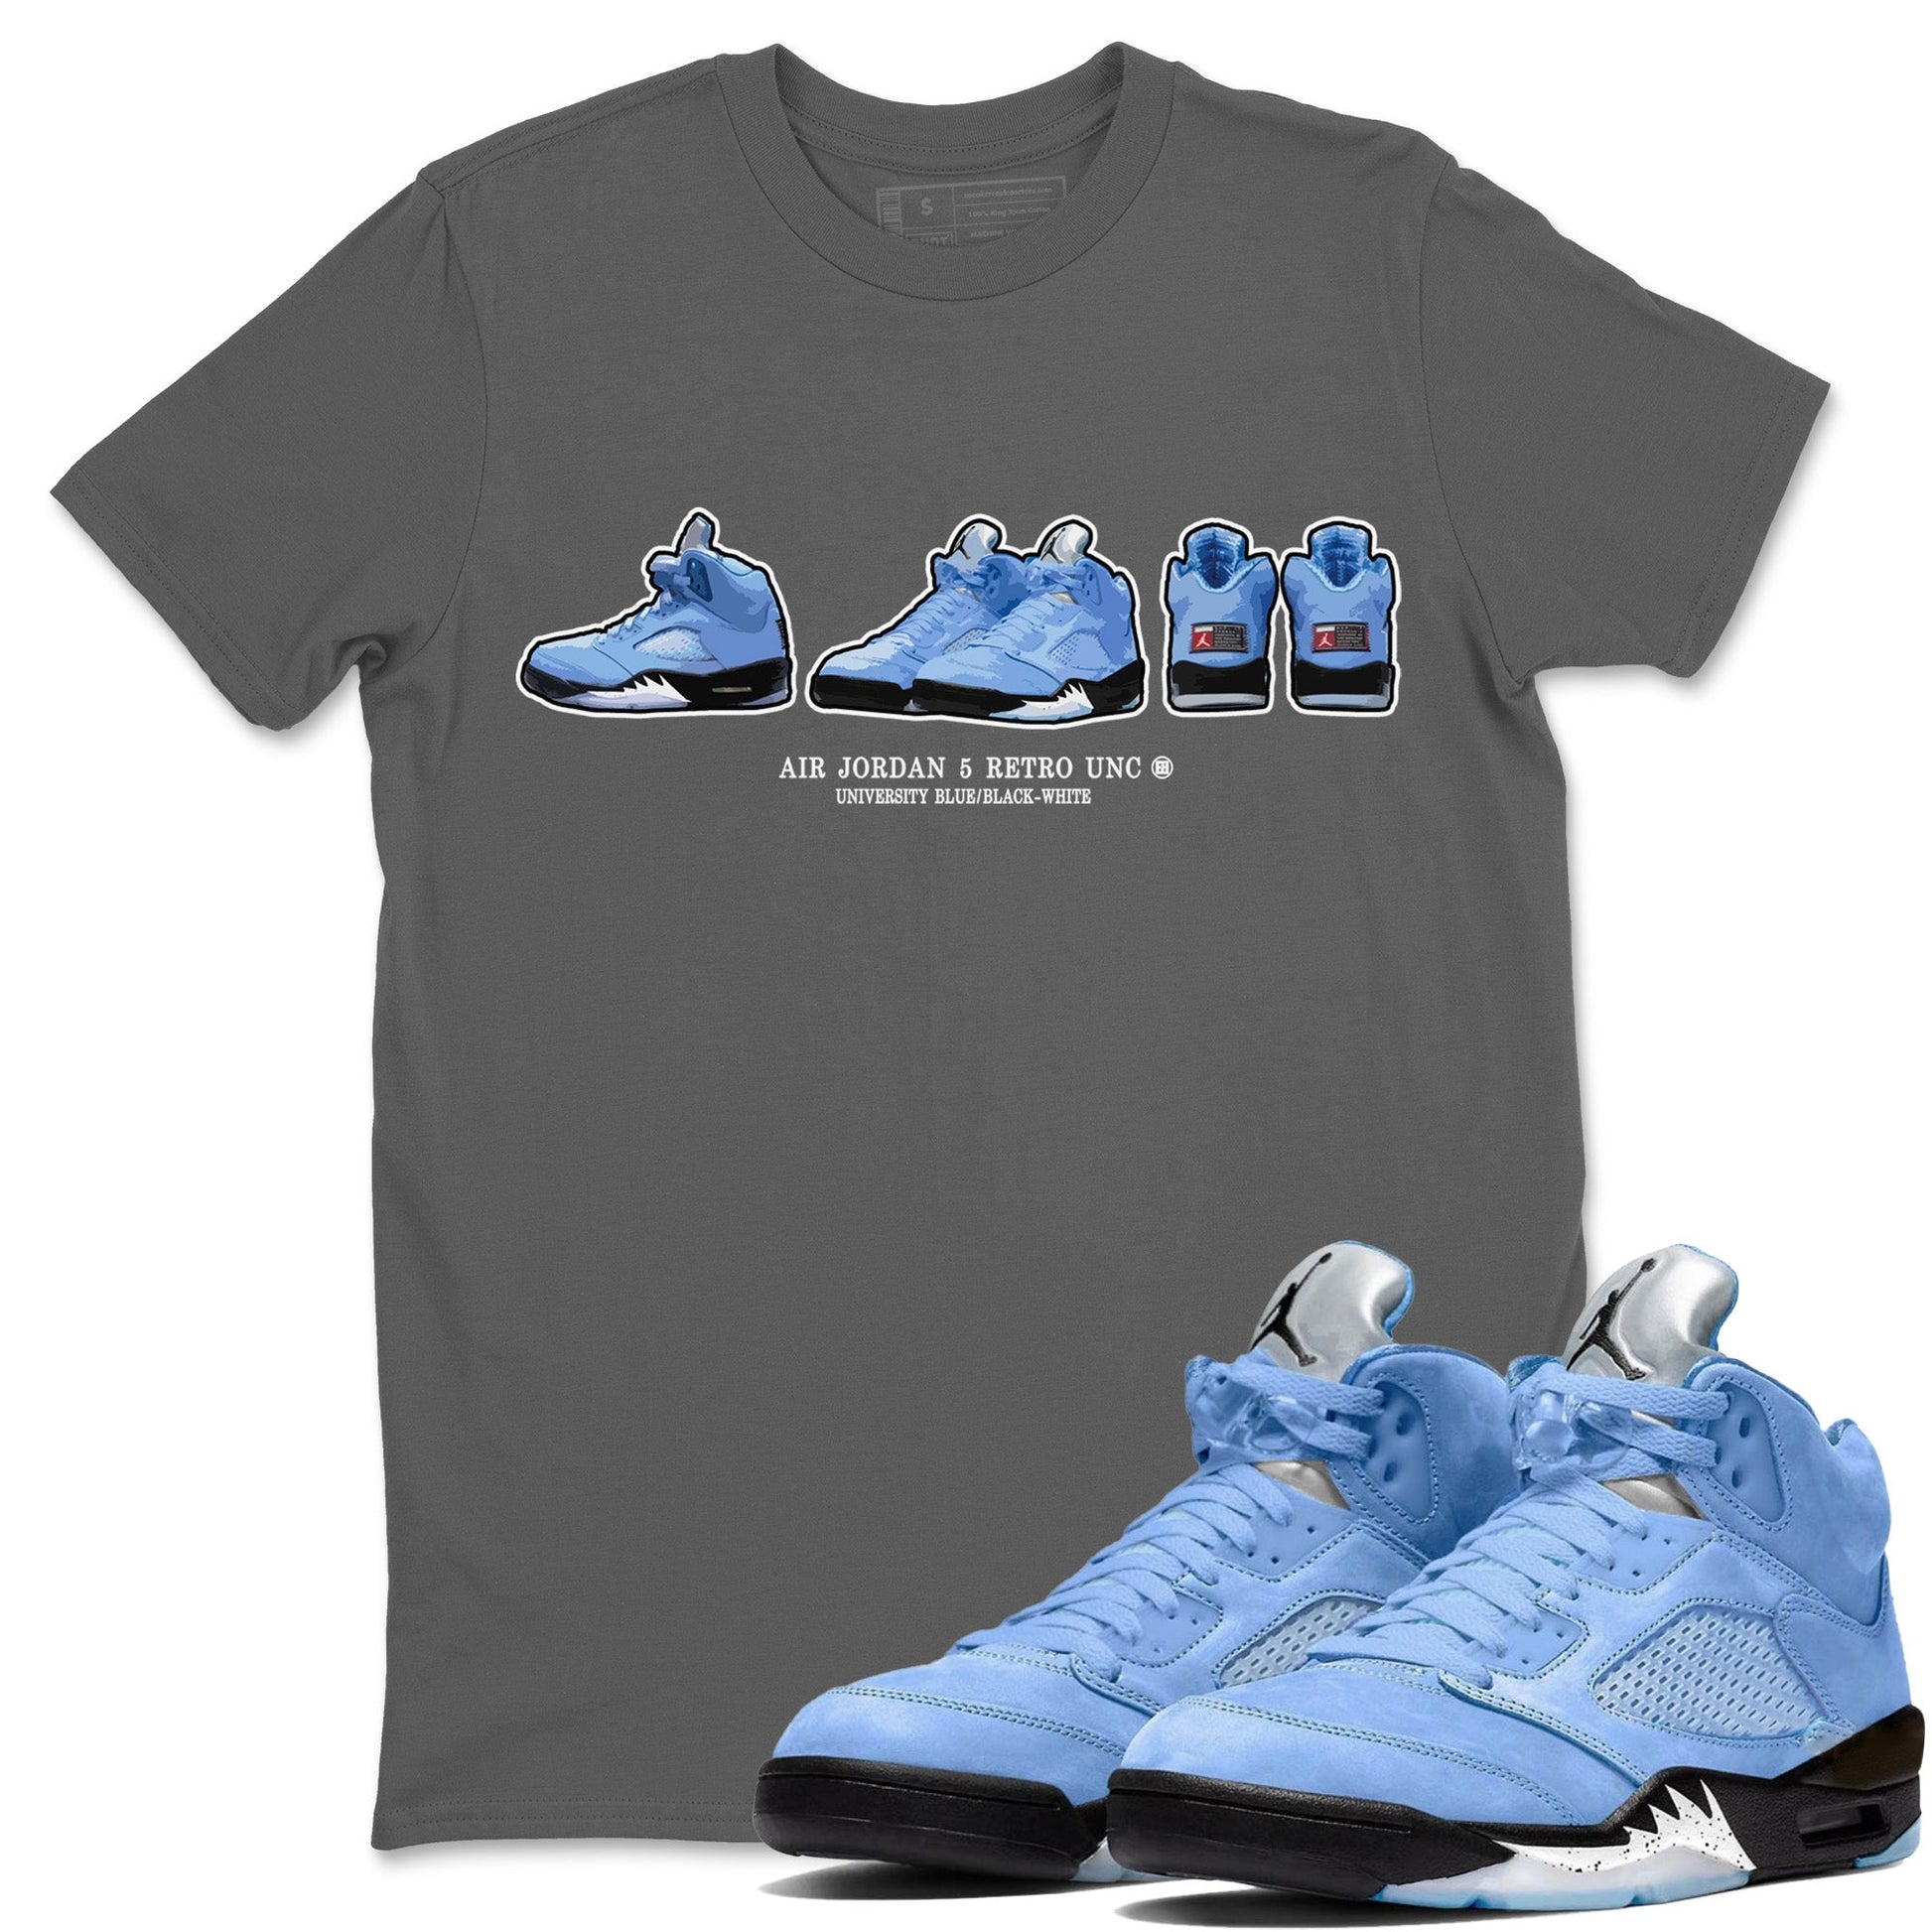 Air Jordan 5 UNC Shirt To Match Jordans Sneaker Prelude Sneaker Tees Air Jordan 5 Retro UNC Drip Gear Zone Sneaker Matching Clothing Unisex Shirts Cool Grey 1